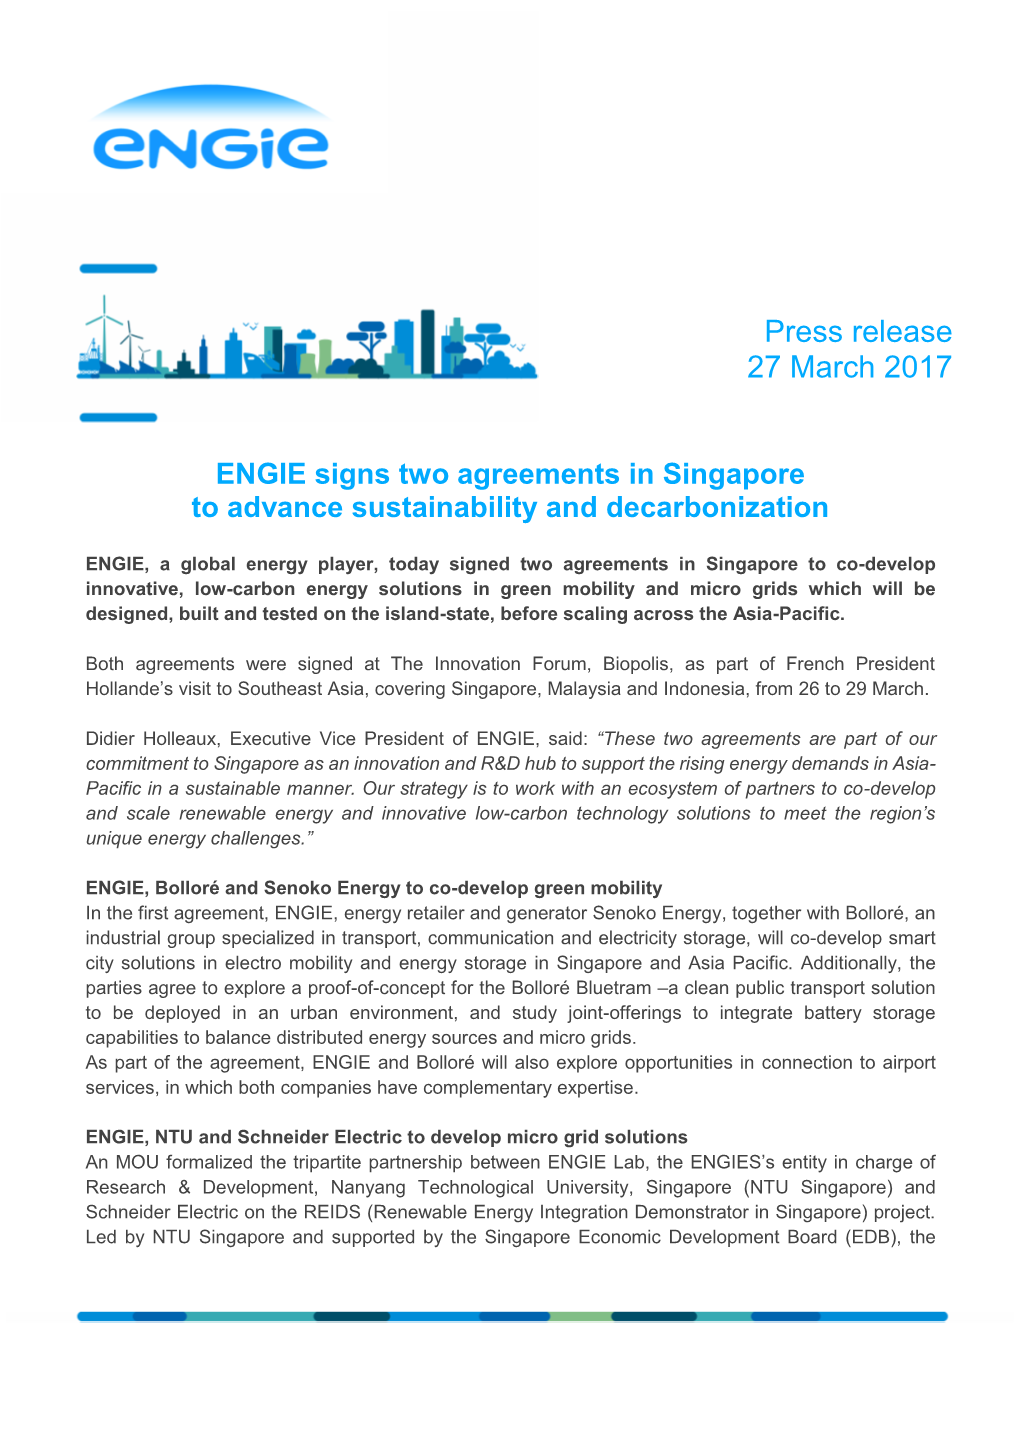 Press Release 27 March 2017